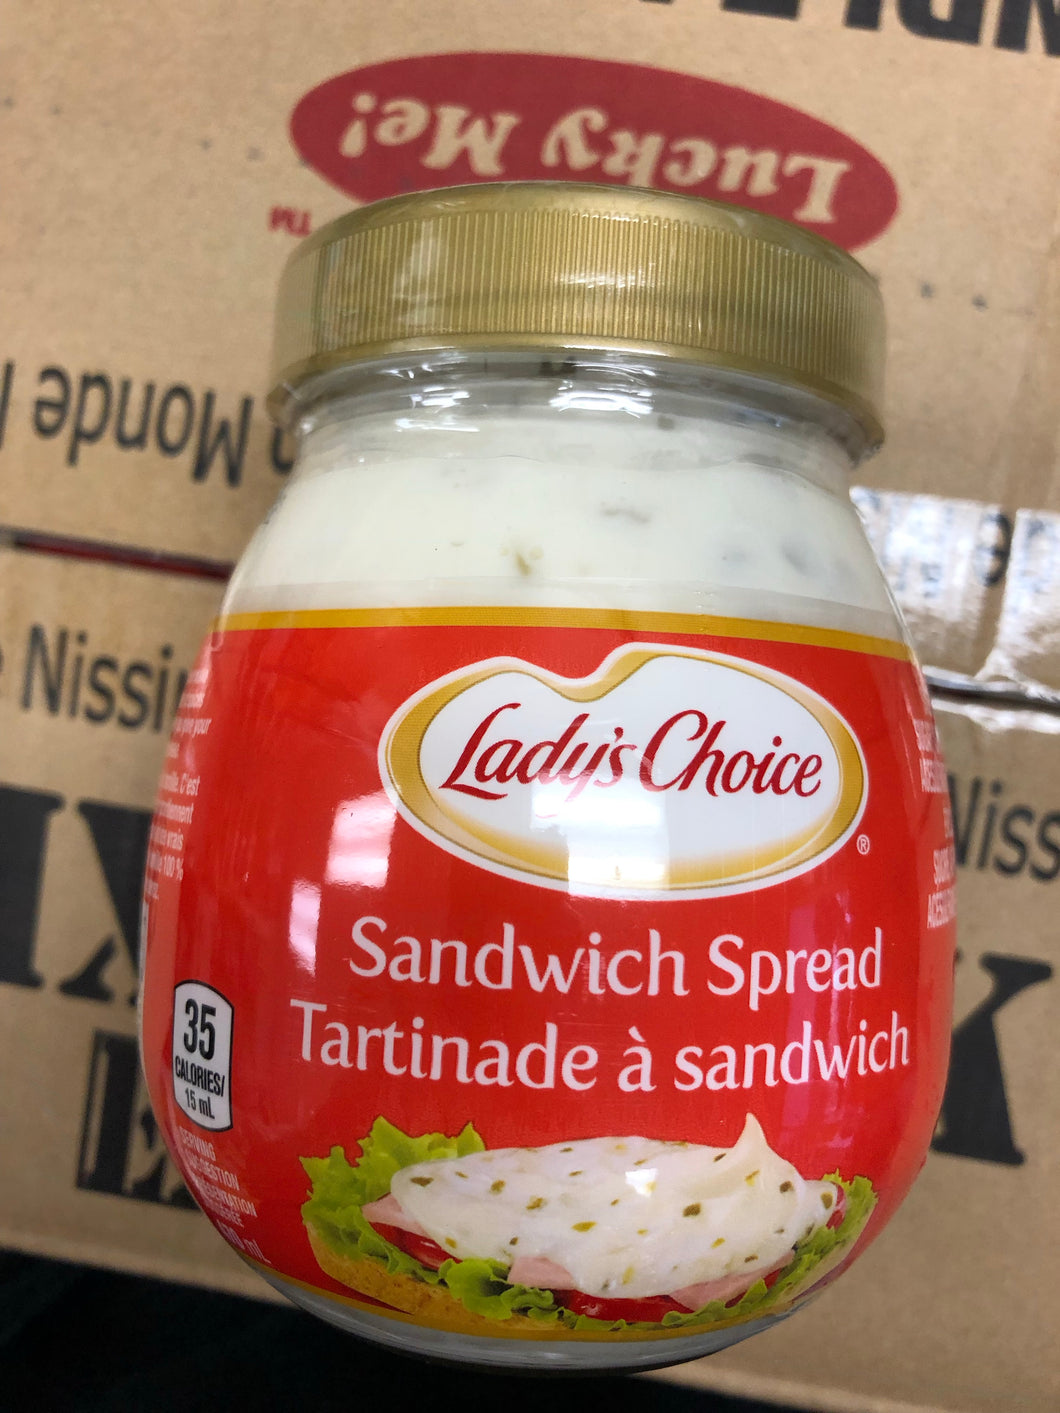 Lady’s choice sandwich spread